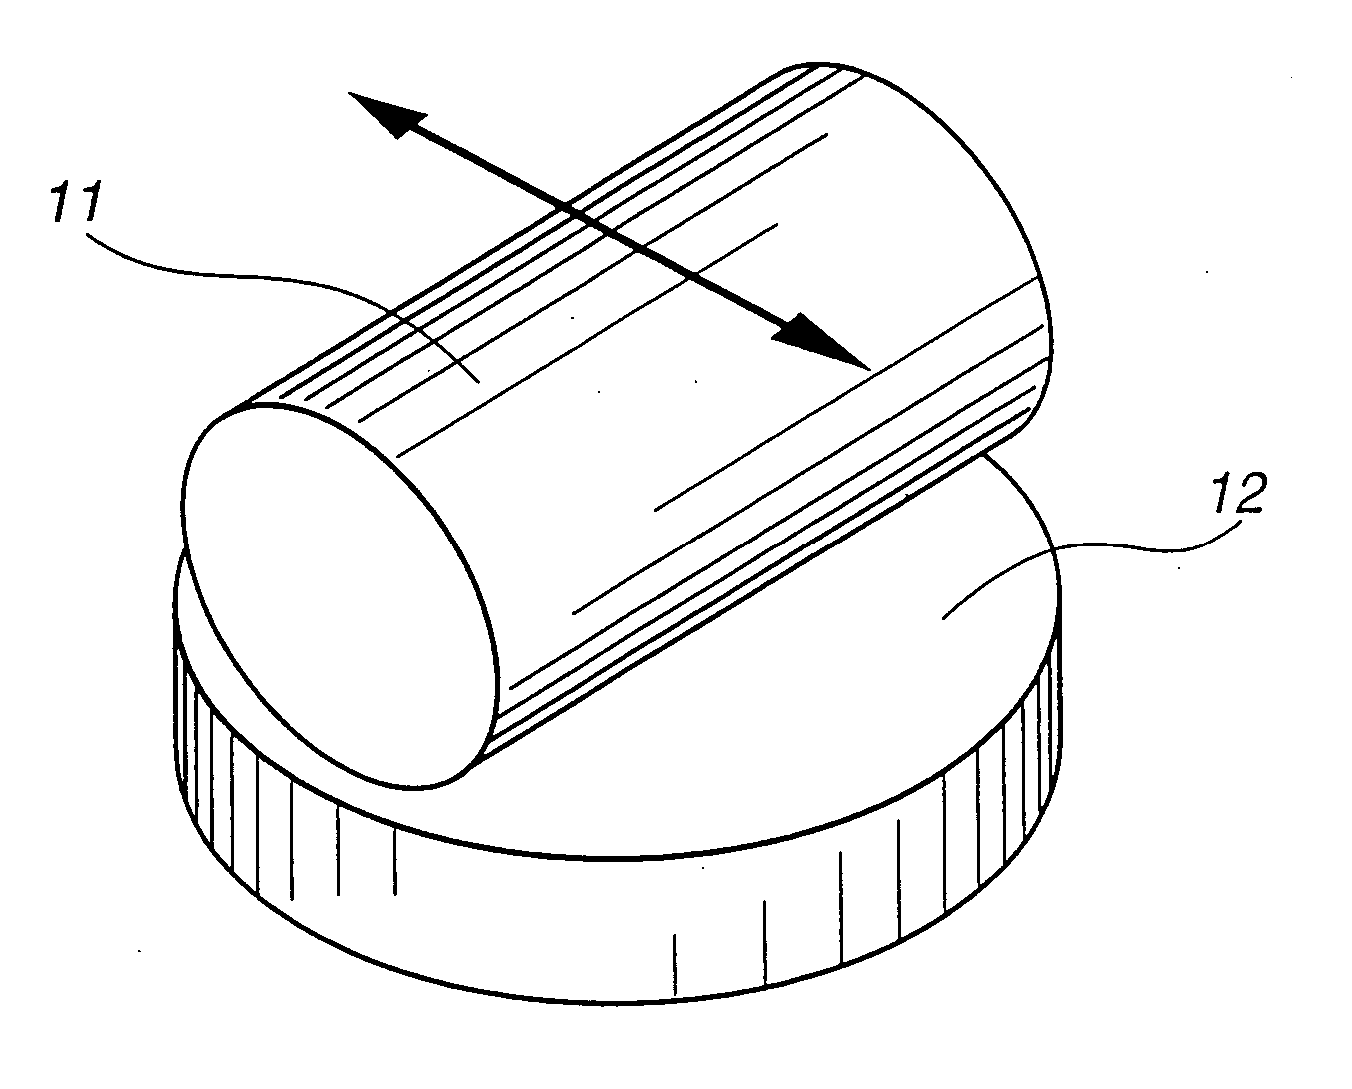 Fuel lubricated sliding mechanism